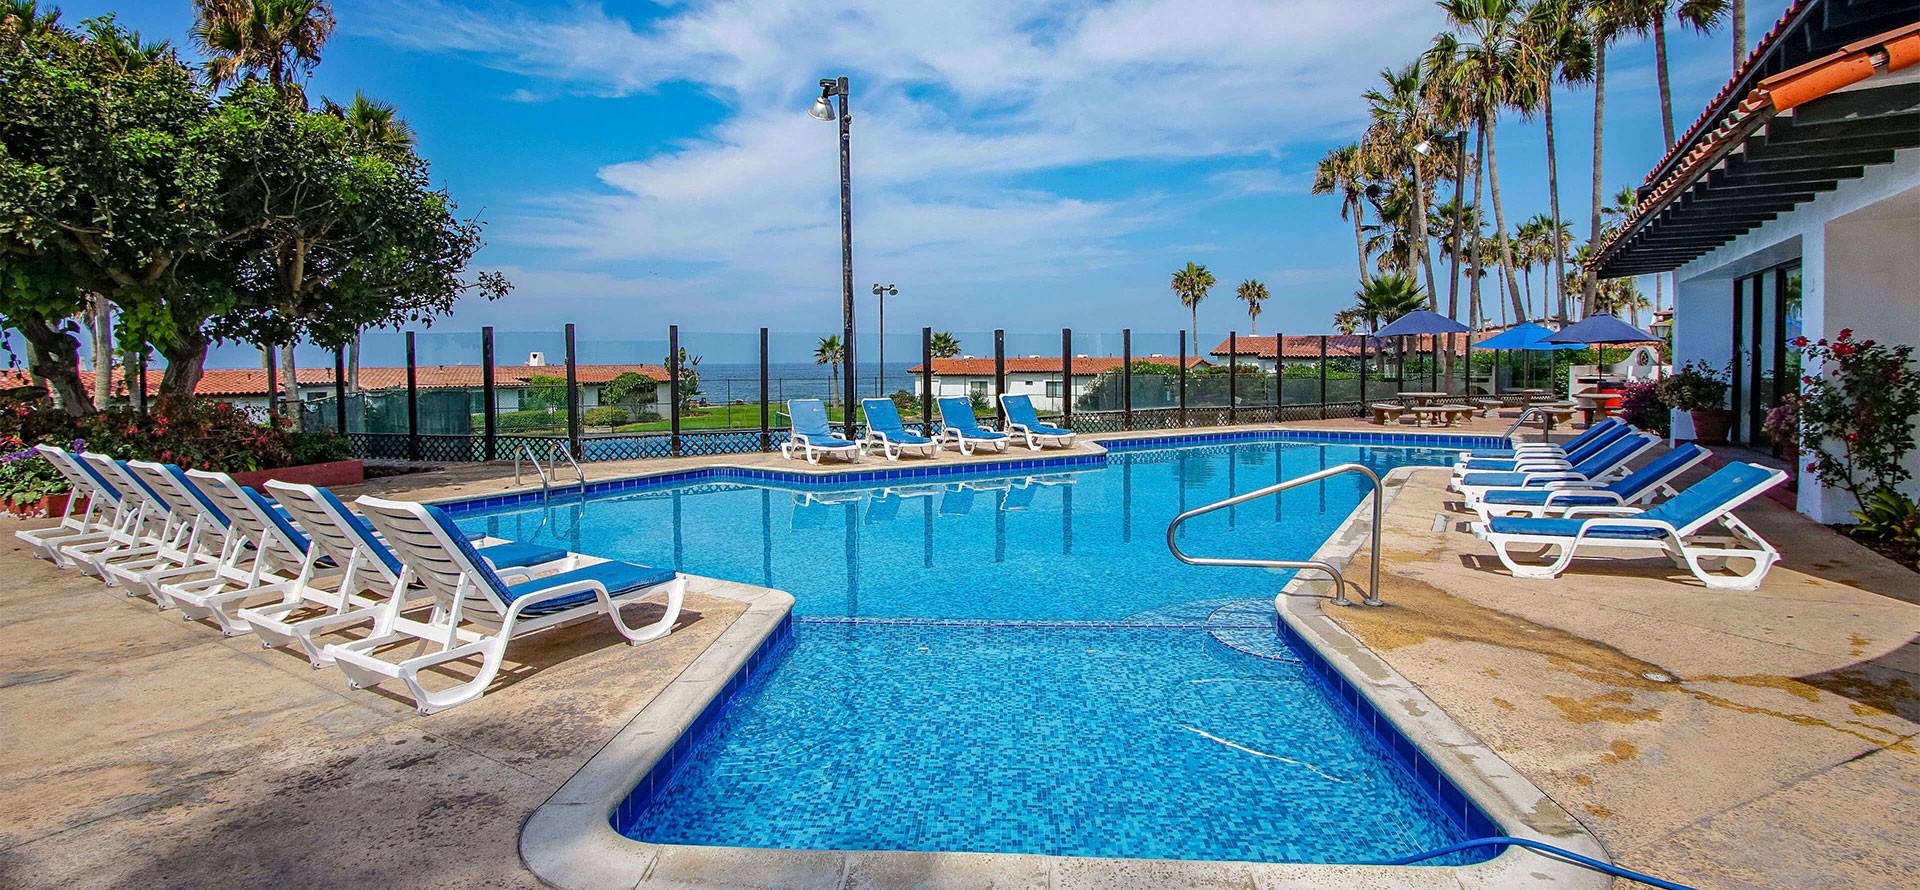 Swimming pool in Tijuana All-Inclusive Resort.